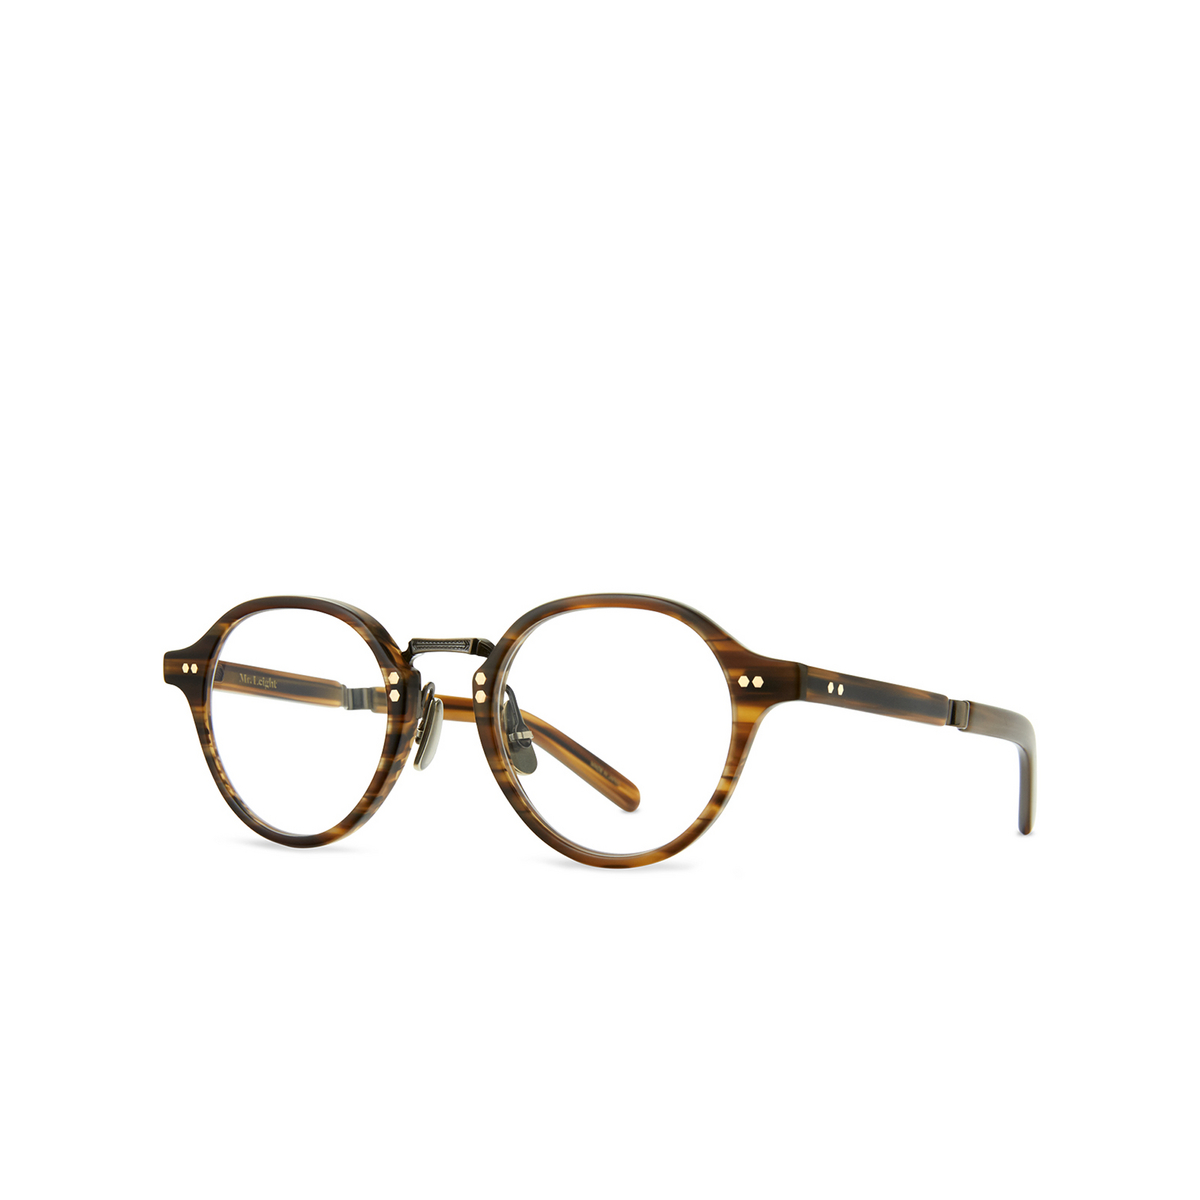 Mr. Leight SPIKE C Eyeglasses MDRFTWD-ATG-MDRFTWD Matte Driftwood-Antique Gold-Matte Driftwood - three-quarters view